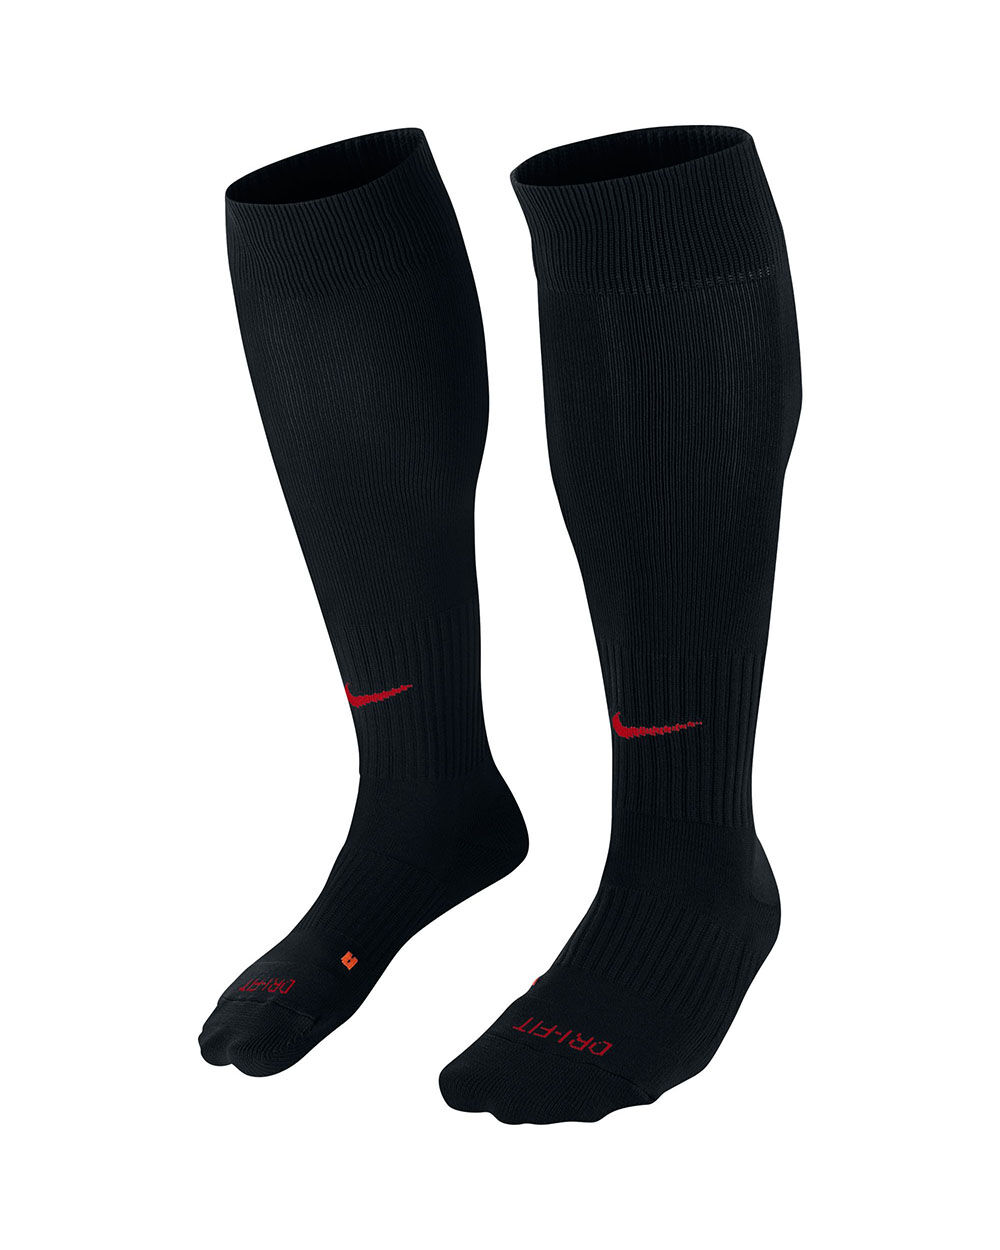 Calcetines Nike Classic II - Tallas 38 a 42 - SX5728-012 - Negro y Rojo